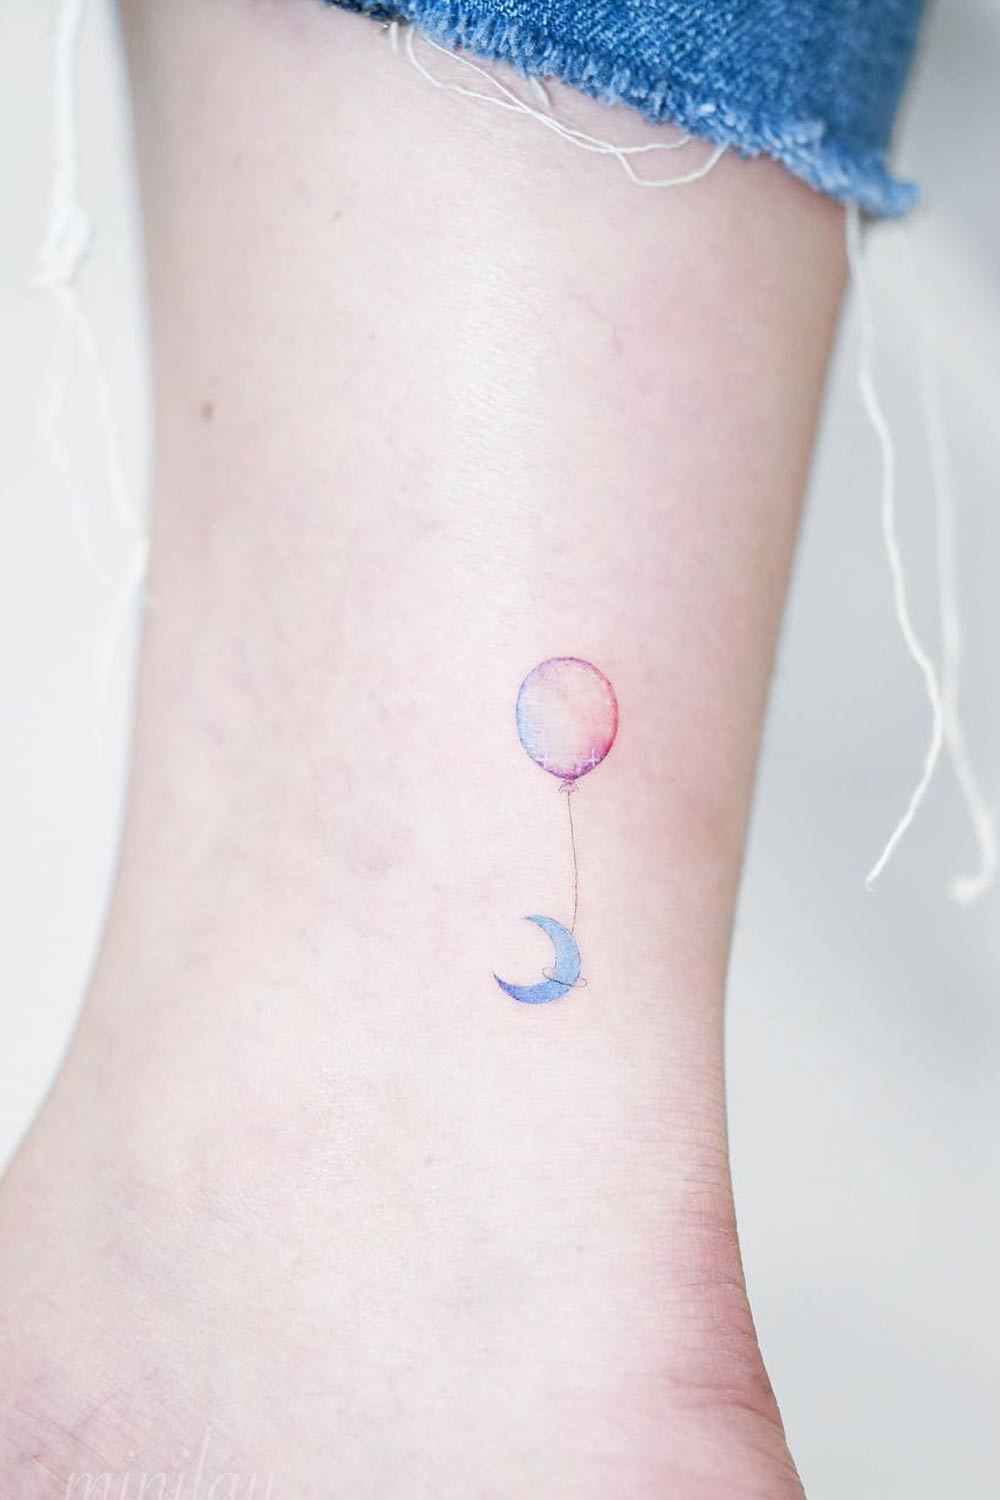 Moon with a Balloon Tattoo Idea